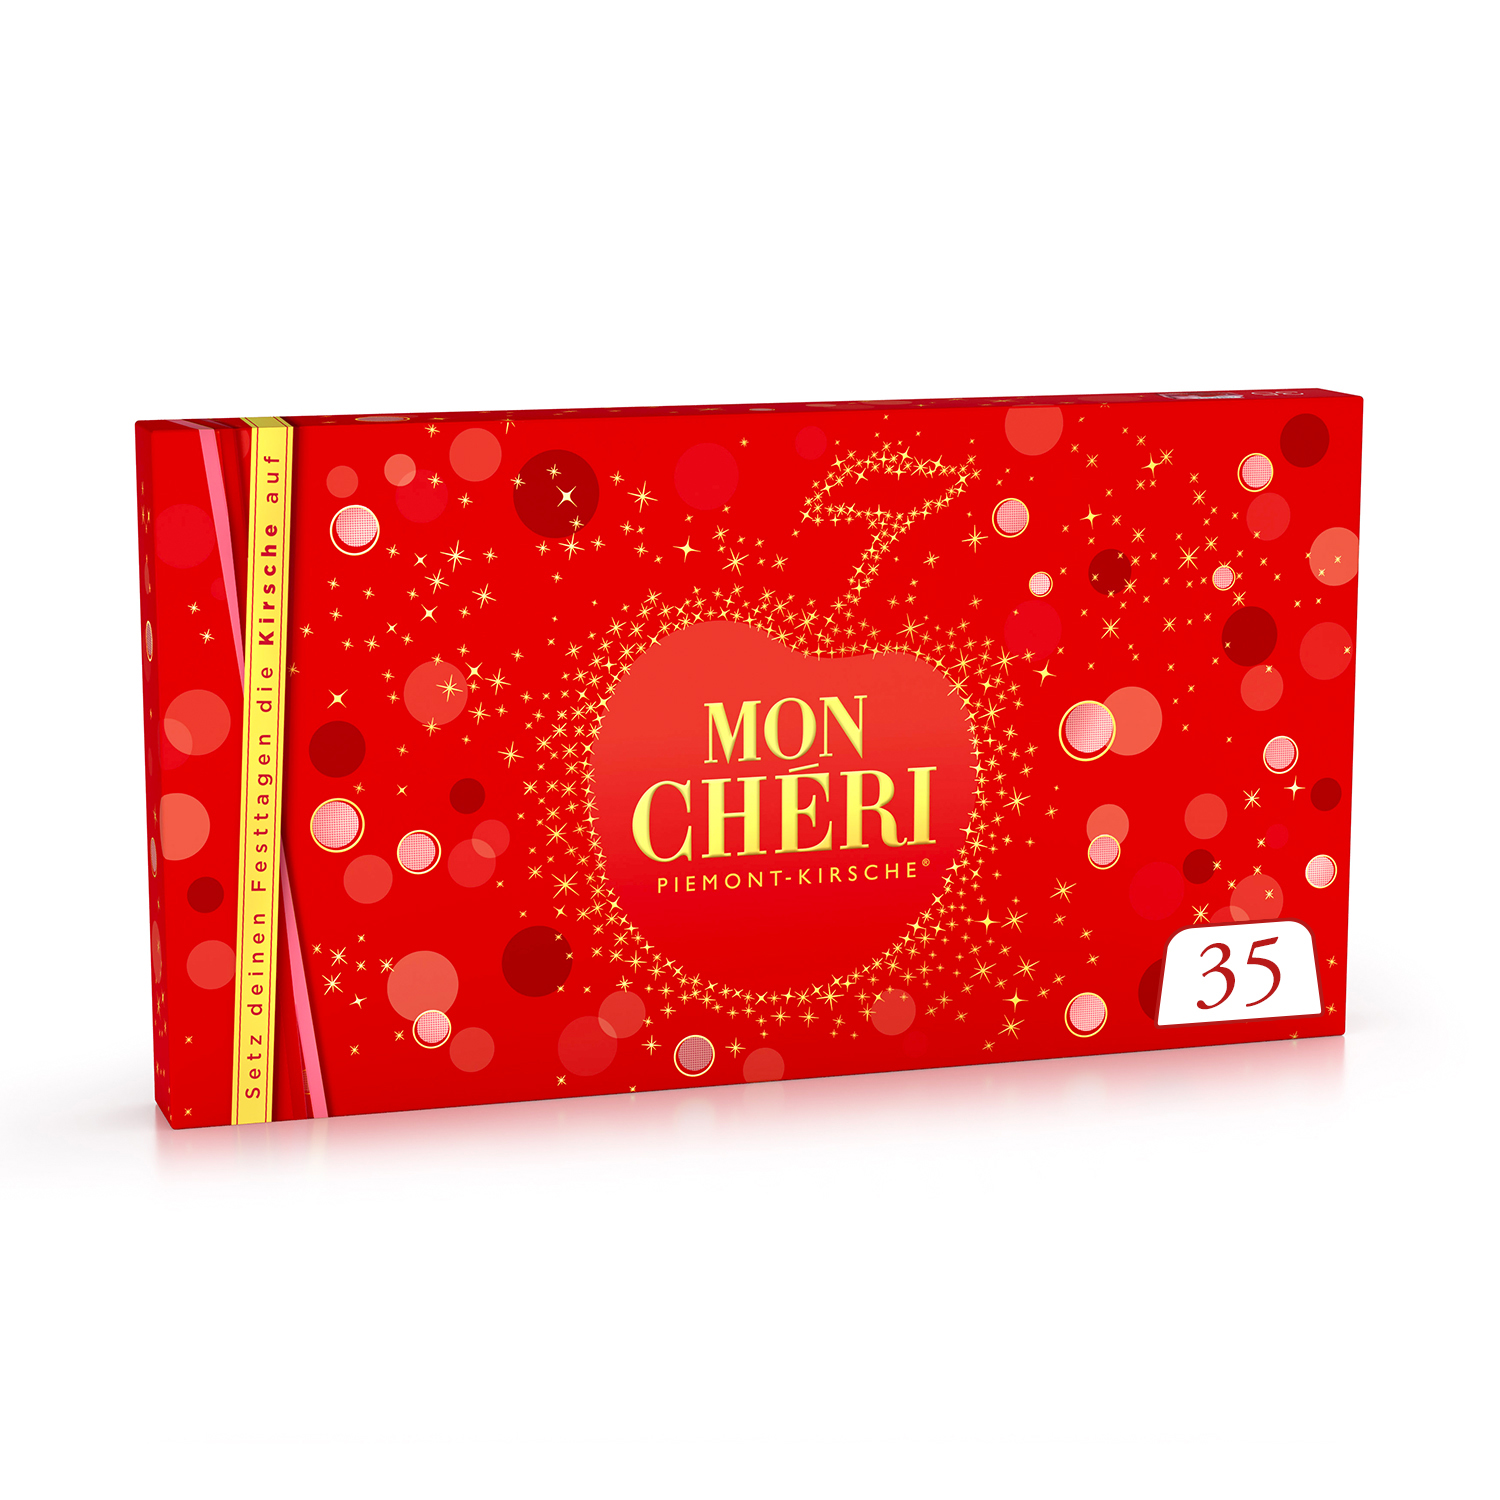 MON CHERI®: jusqu'à 120 chocolats